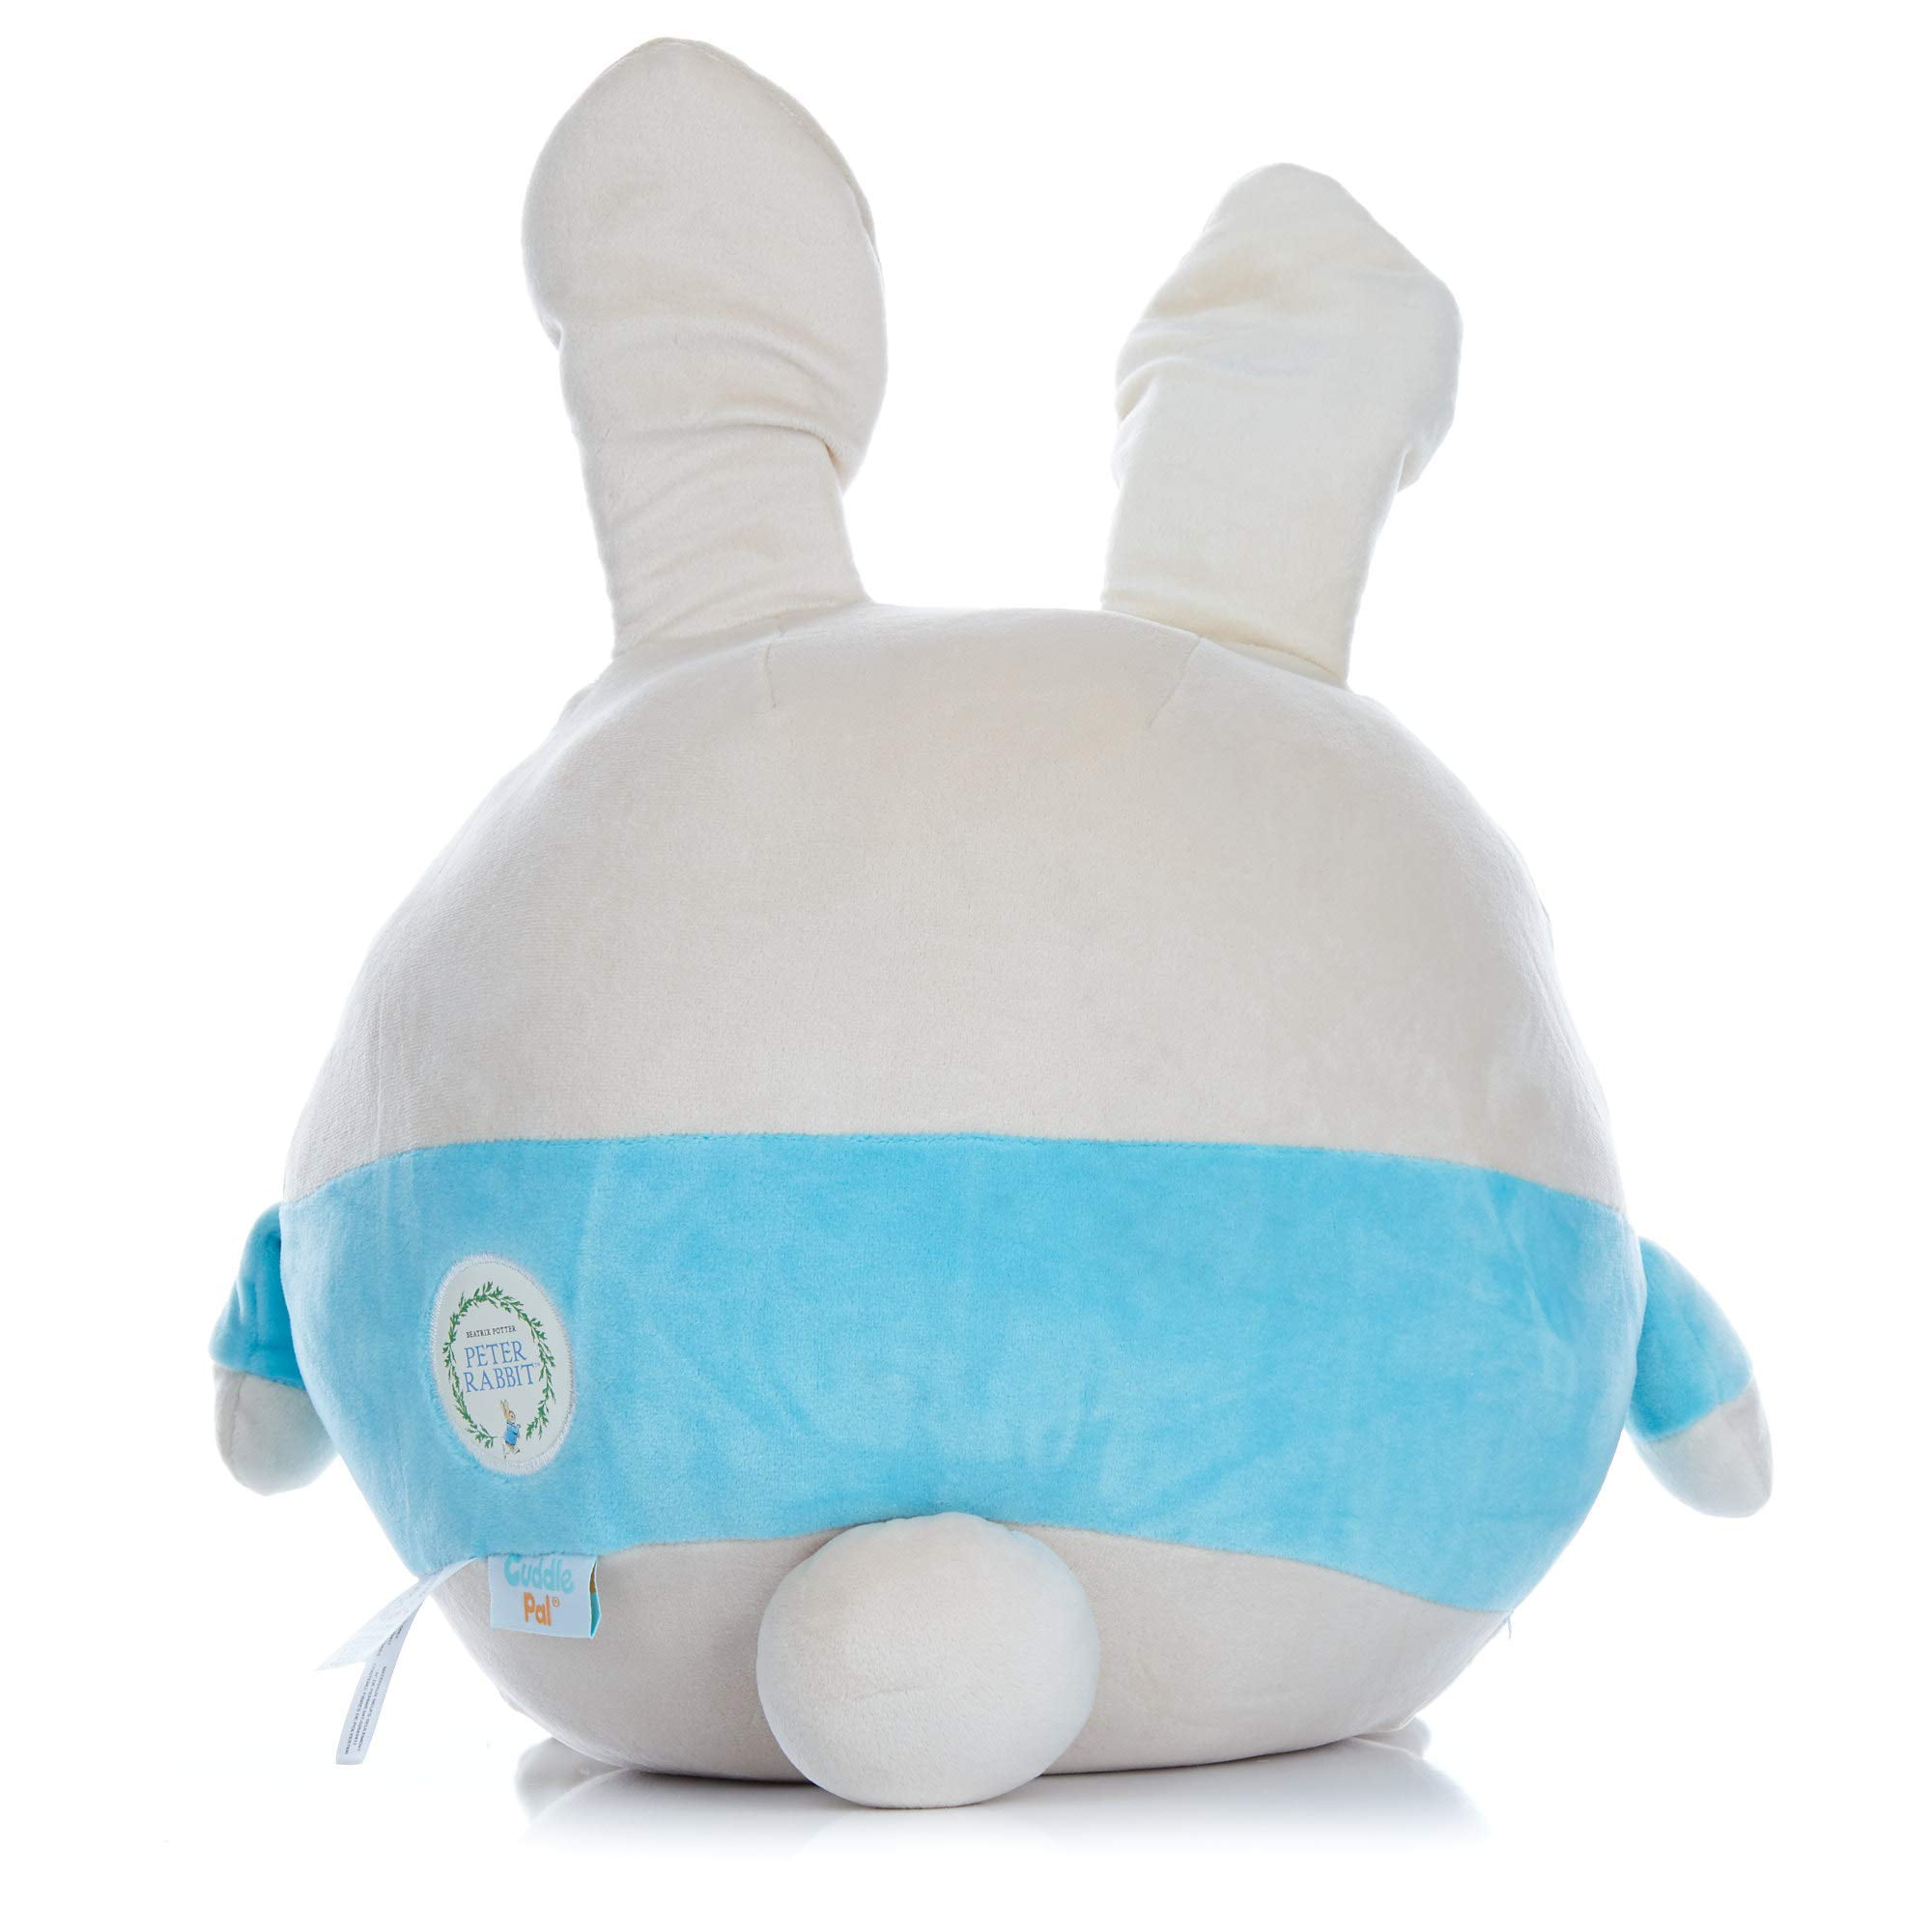 Kids Preferred 6" Plush Bunny round Cuddle Pal Rabbit Stuffed Animal  Toy